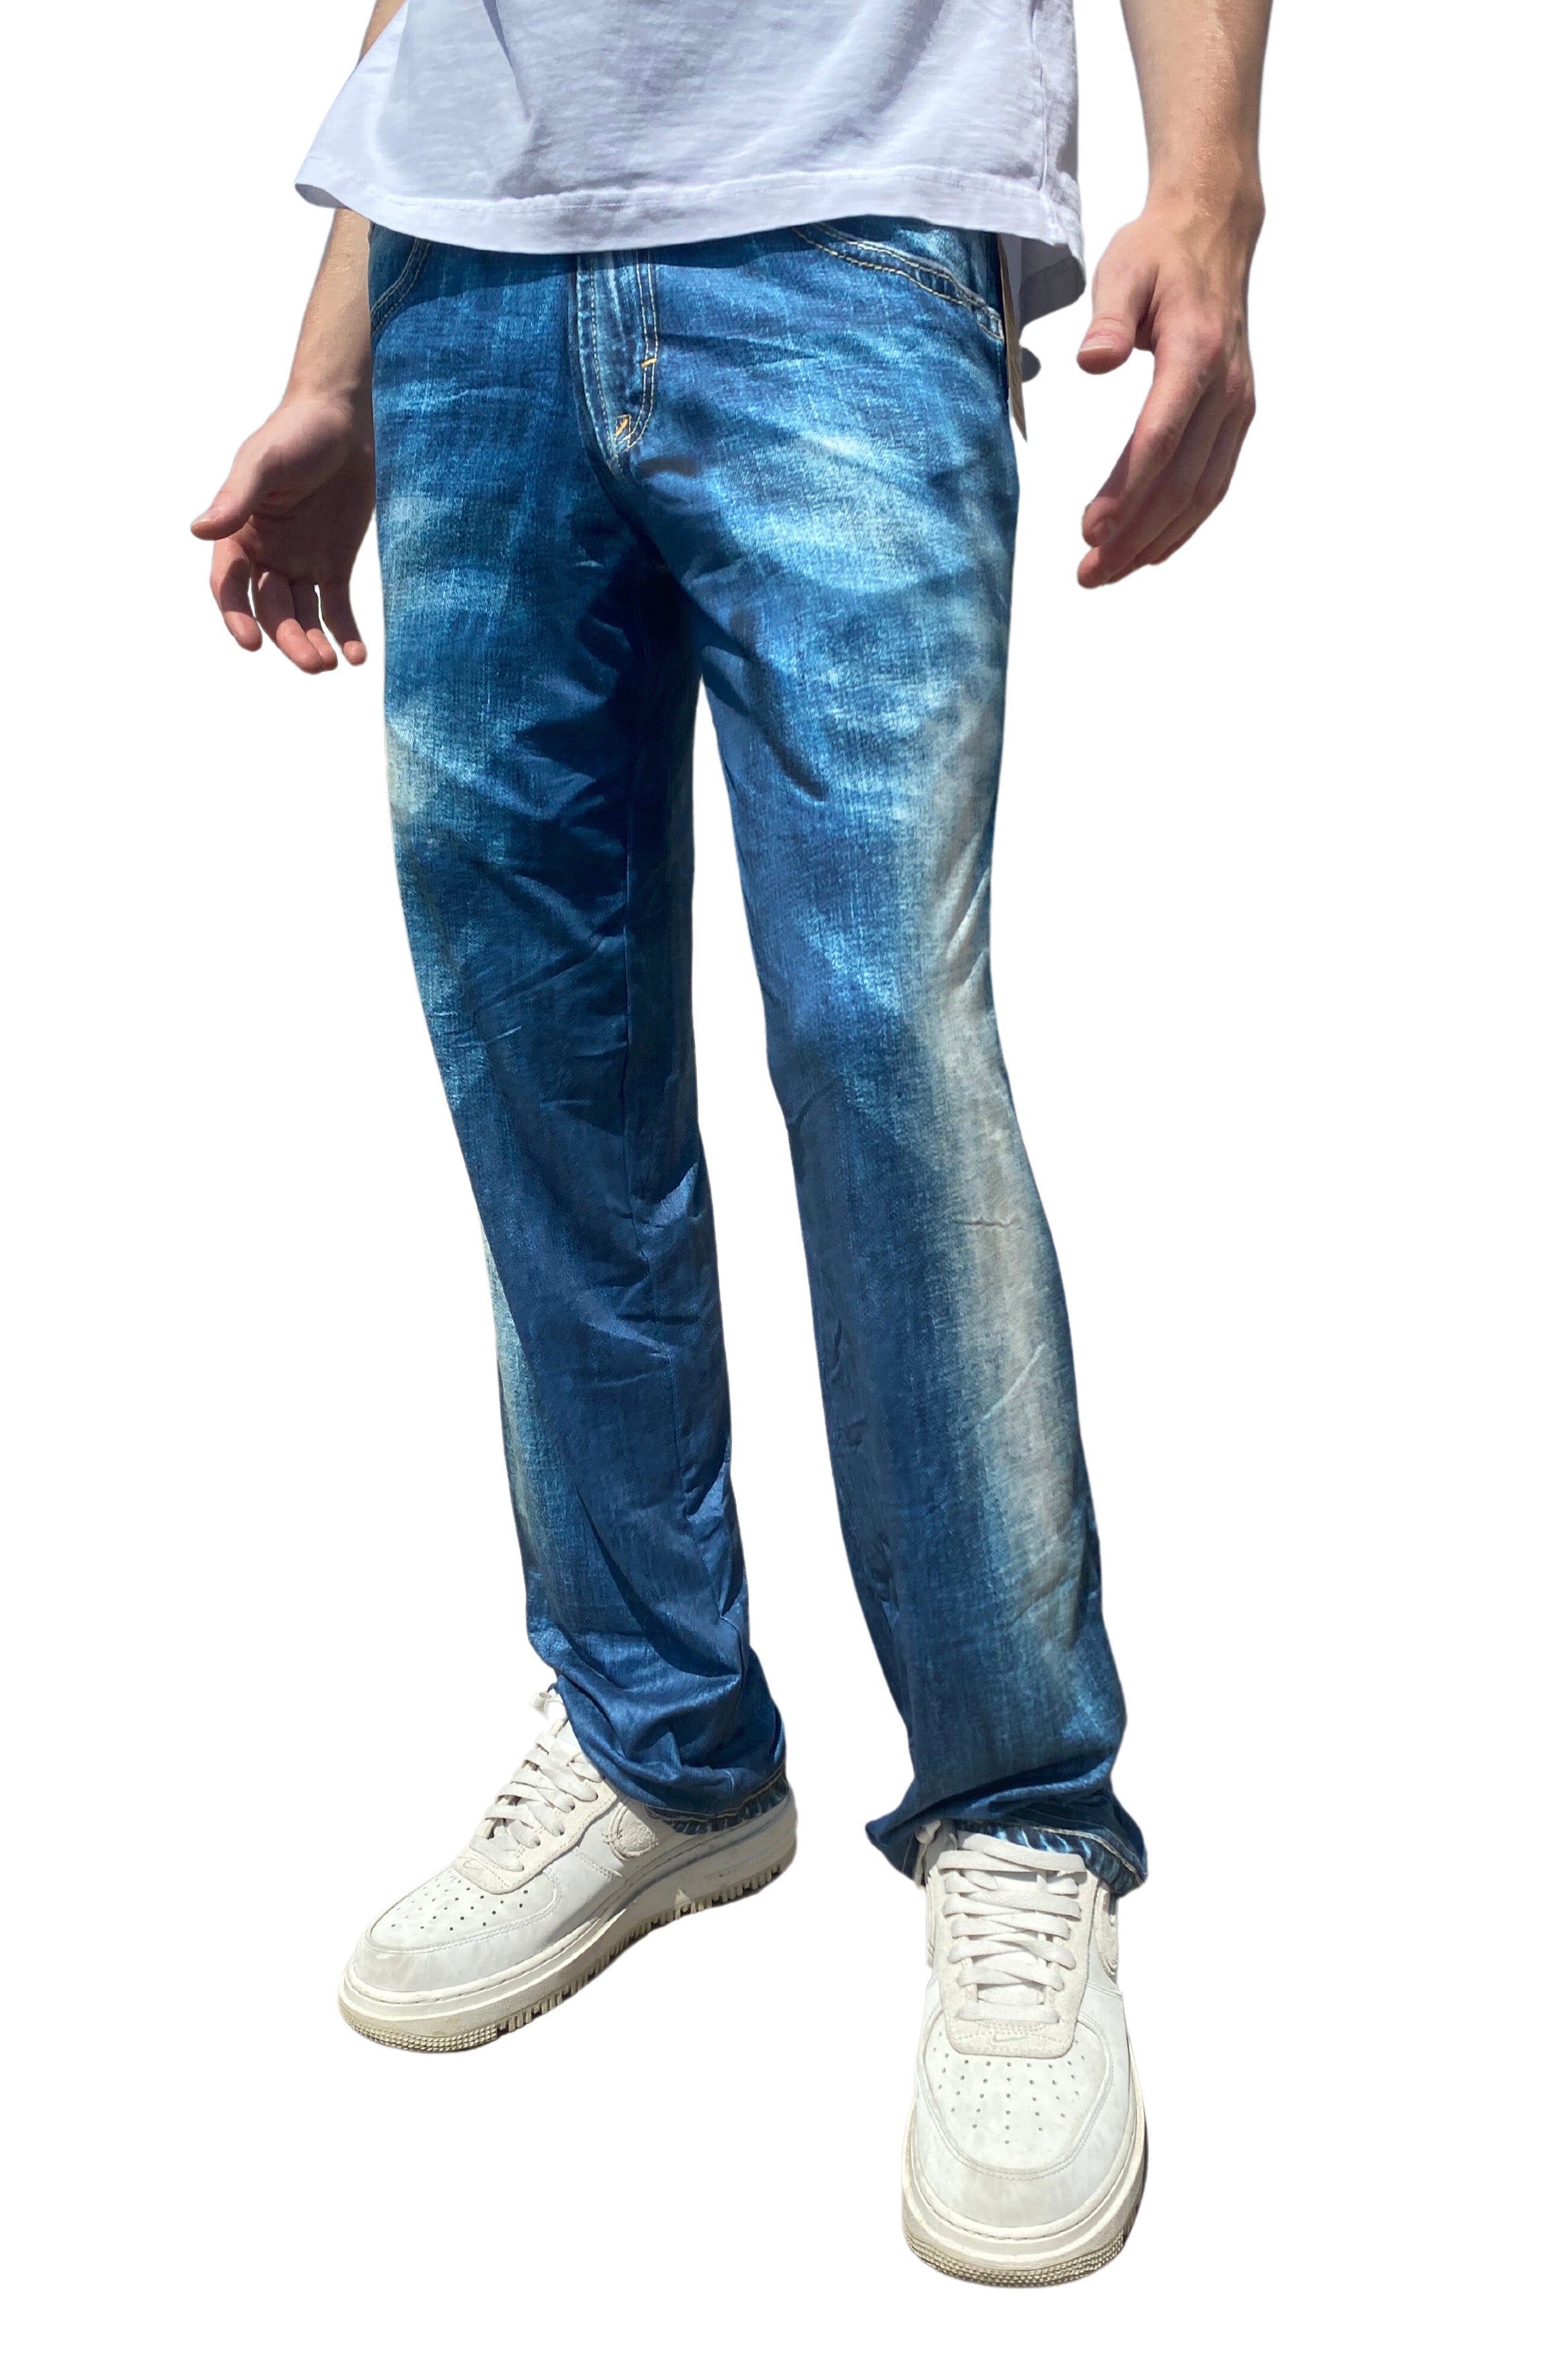 Blue Jeans Pajama Lounge Pants left side view on model (waist down)